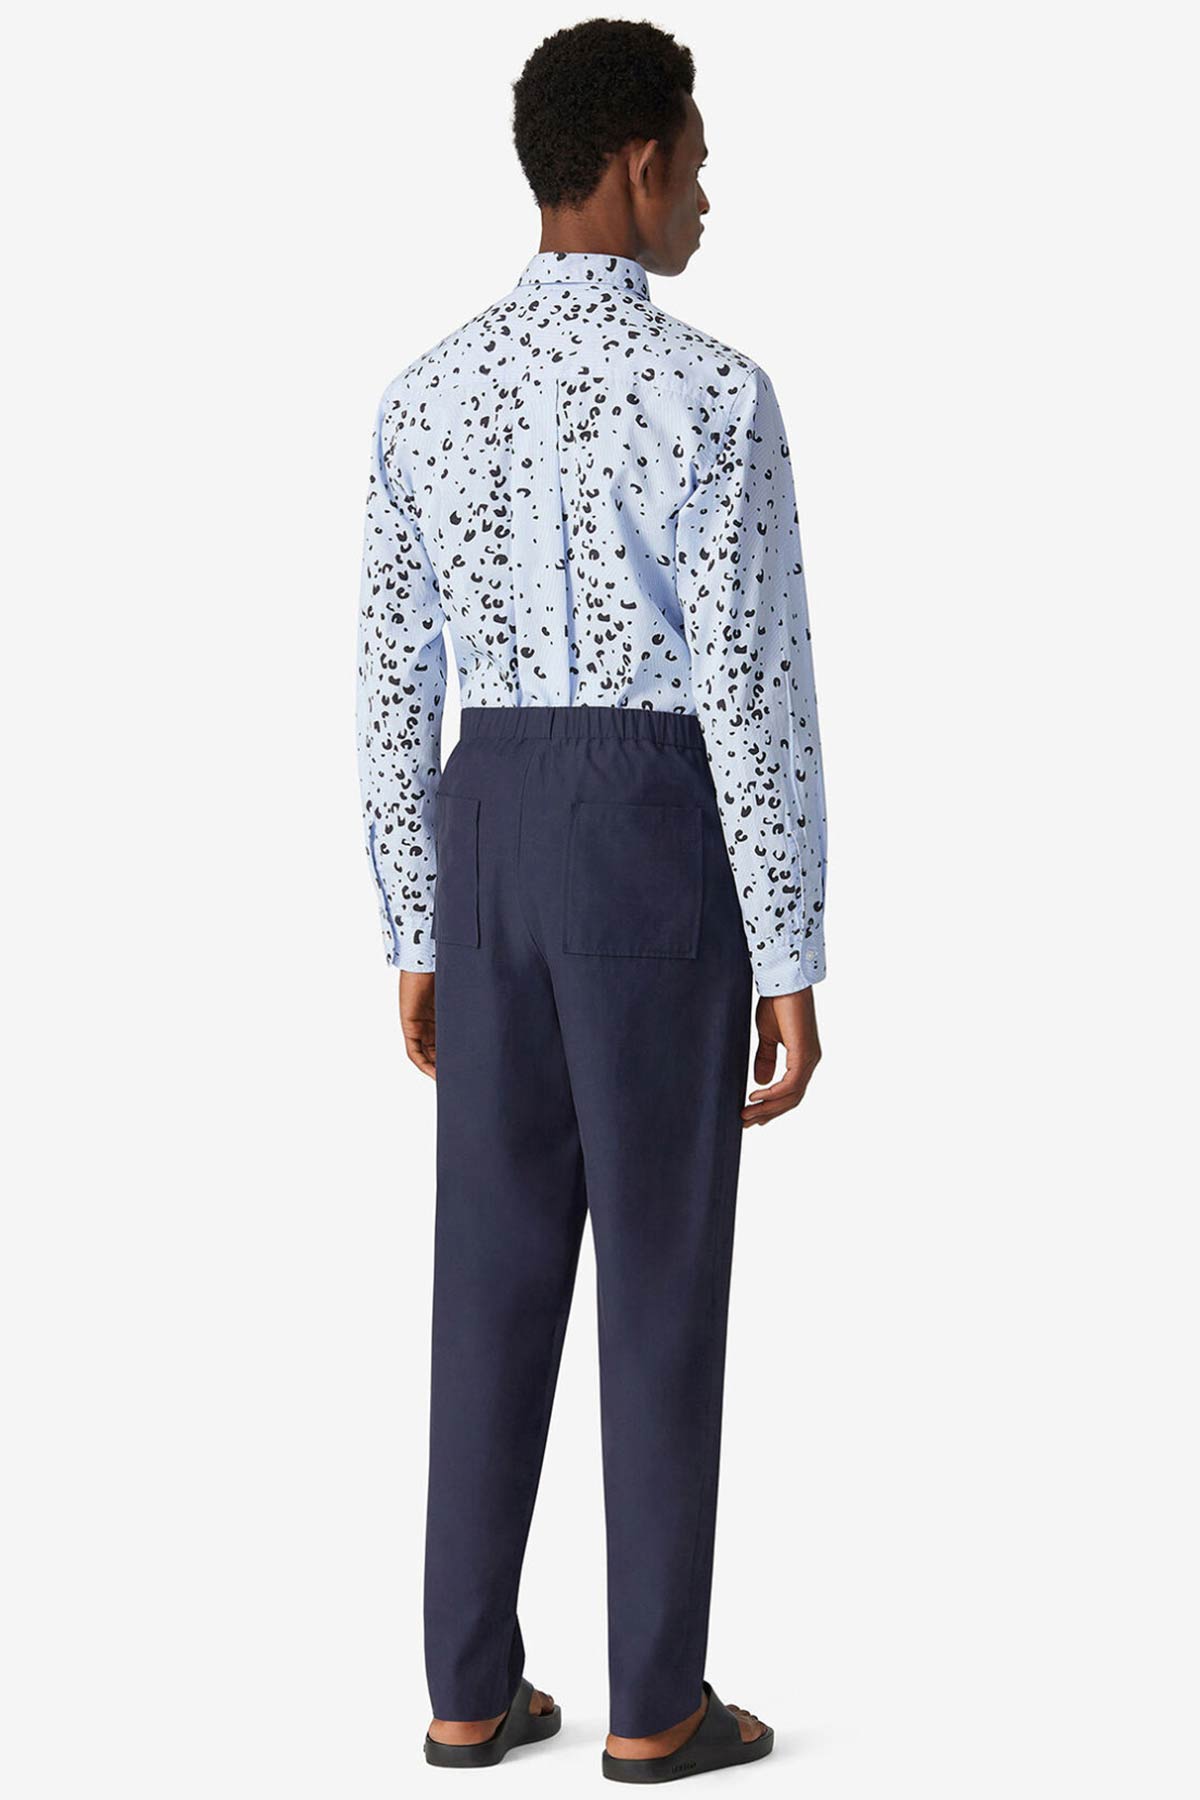 Kenzo Elastik Bel Yandan Cepli Pantolon-Libas Trendy Fashion Store